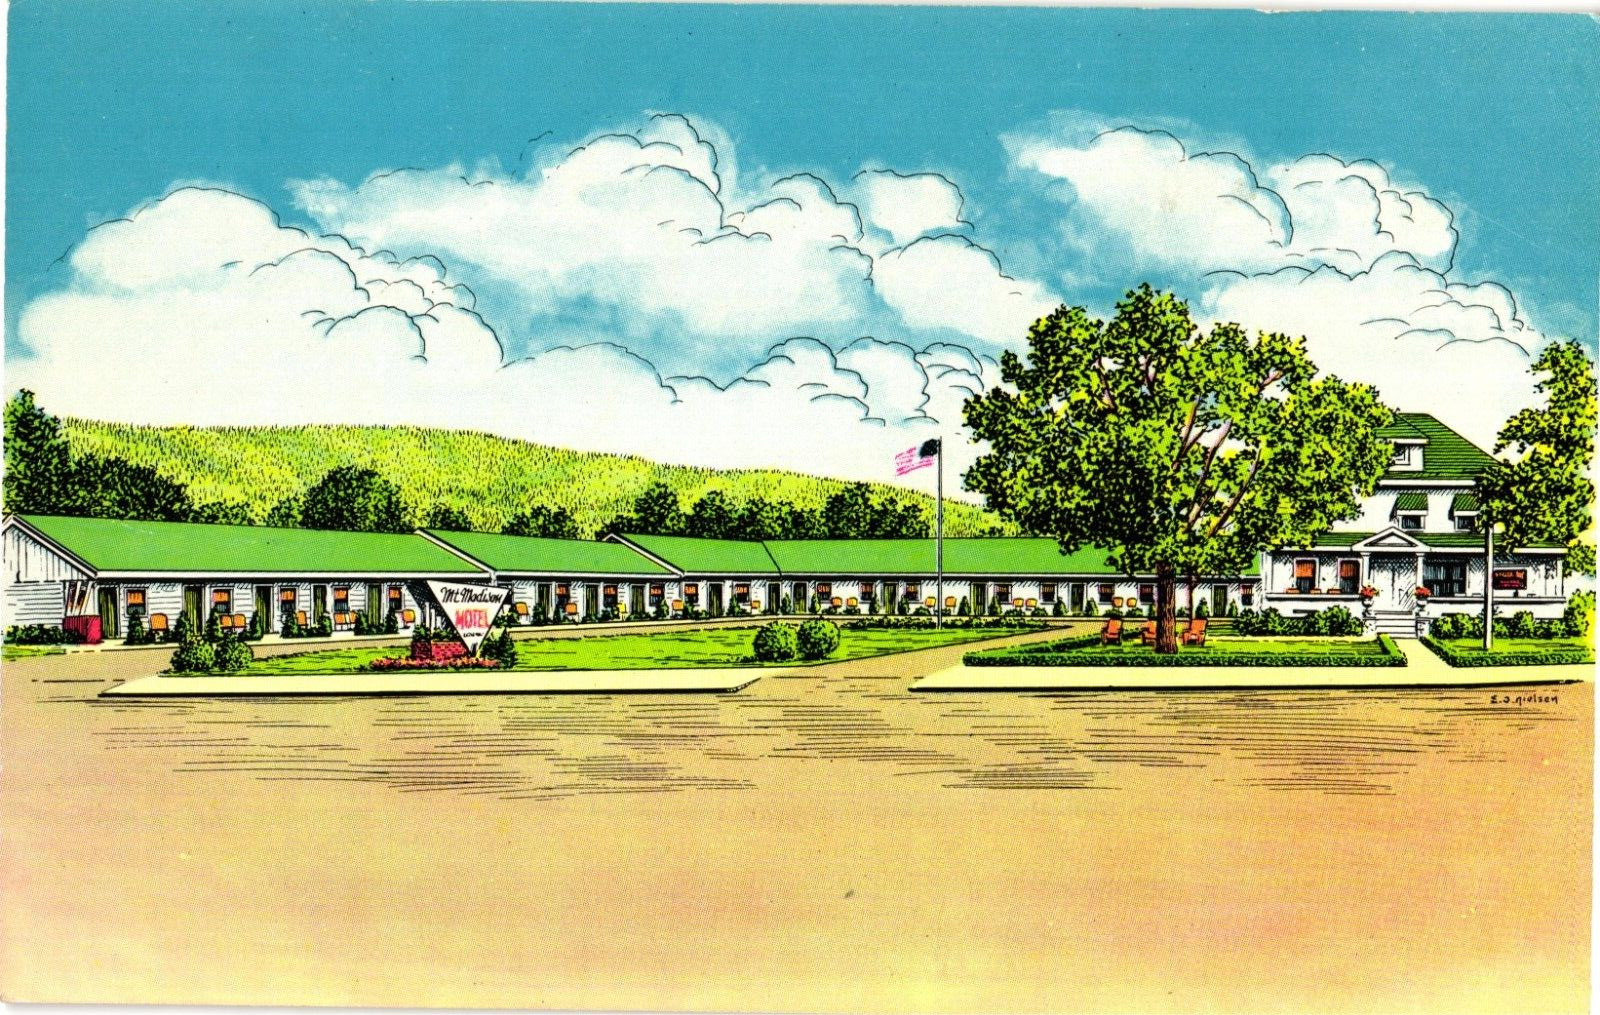 Mount Madison Motel Advertising Gorham New Hampshire Postcard c1959